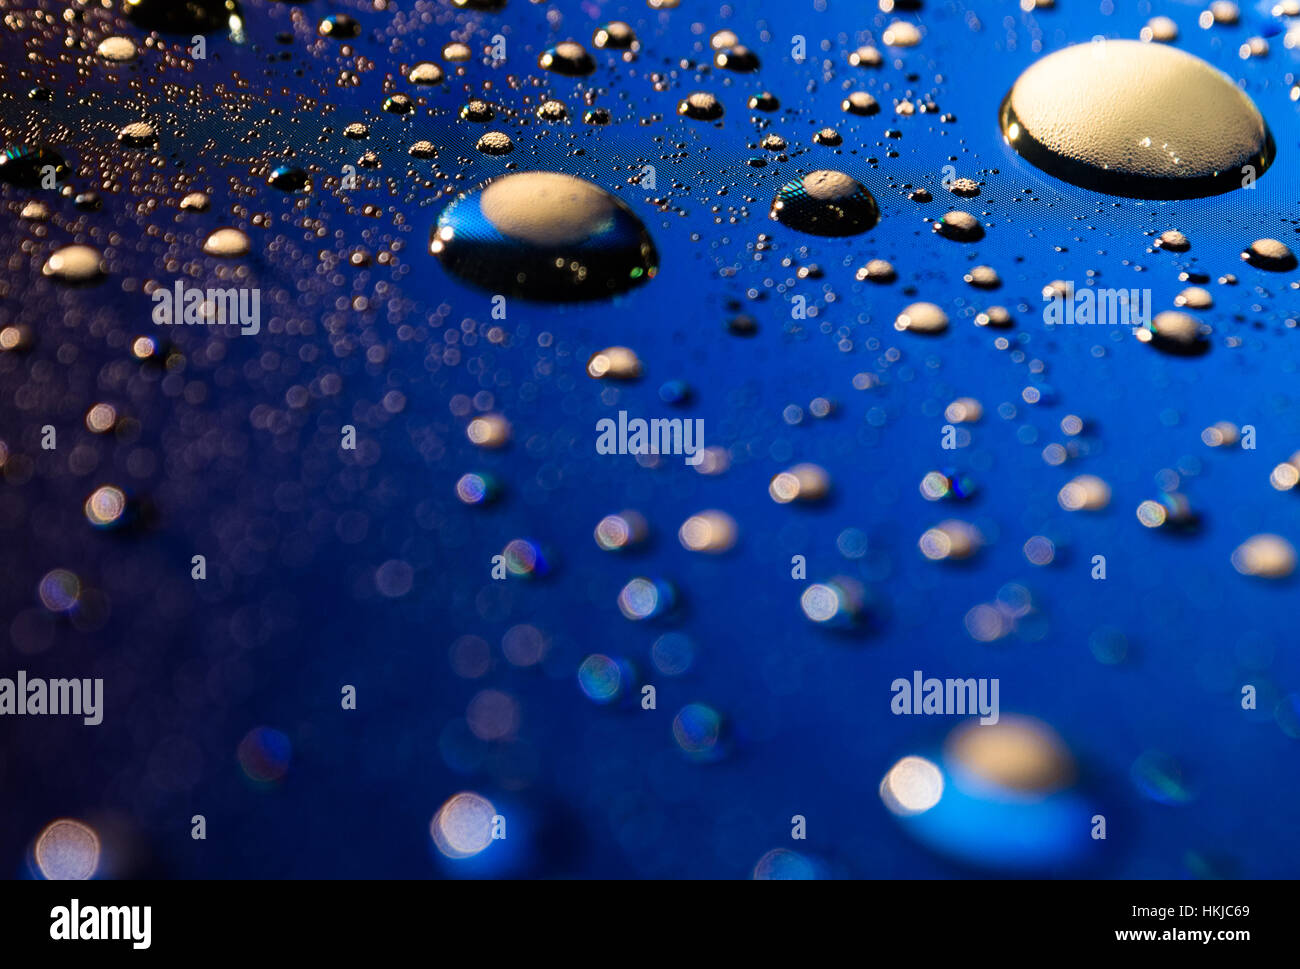 Resumen de gotas de agua en la pantalla iluminada Foto de stock